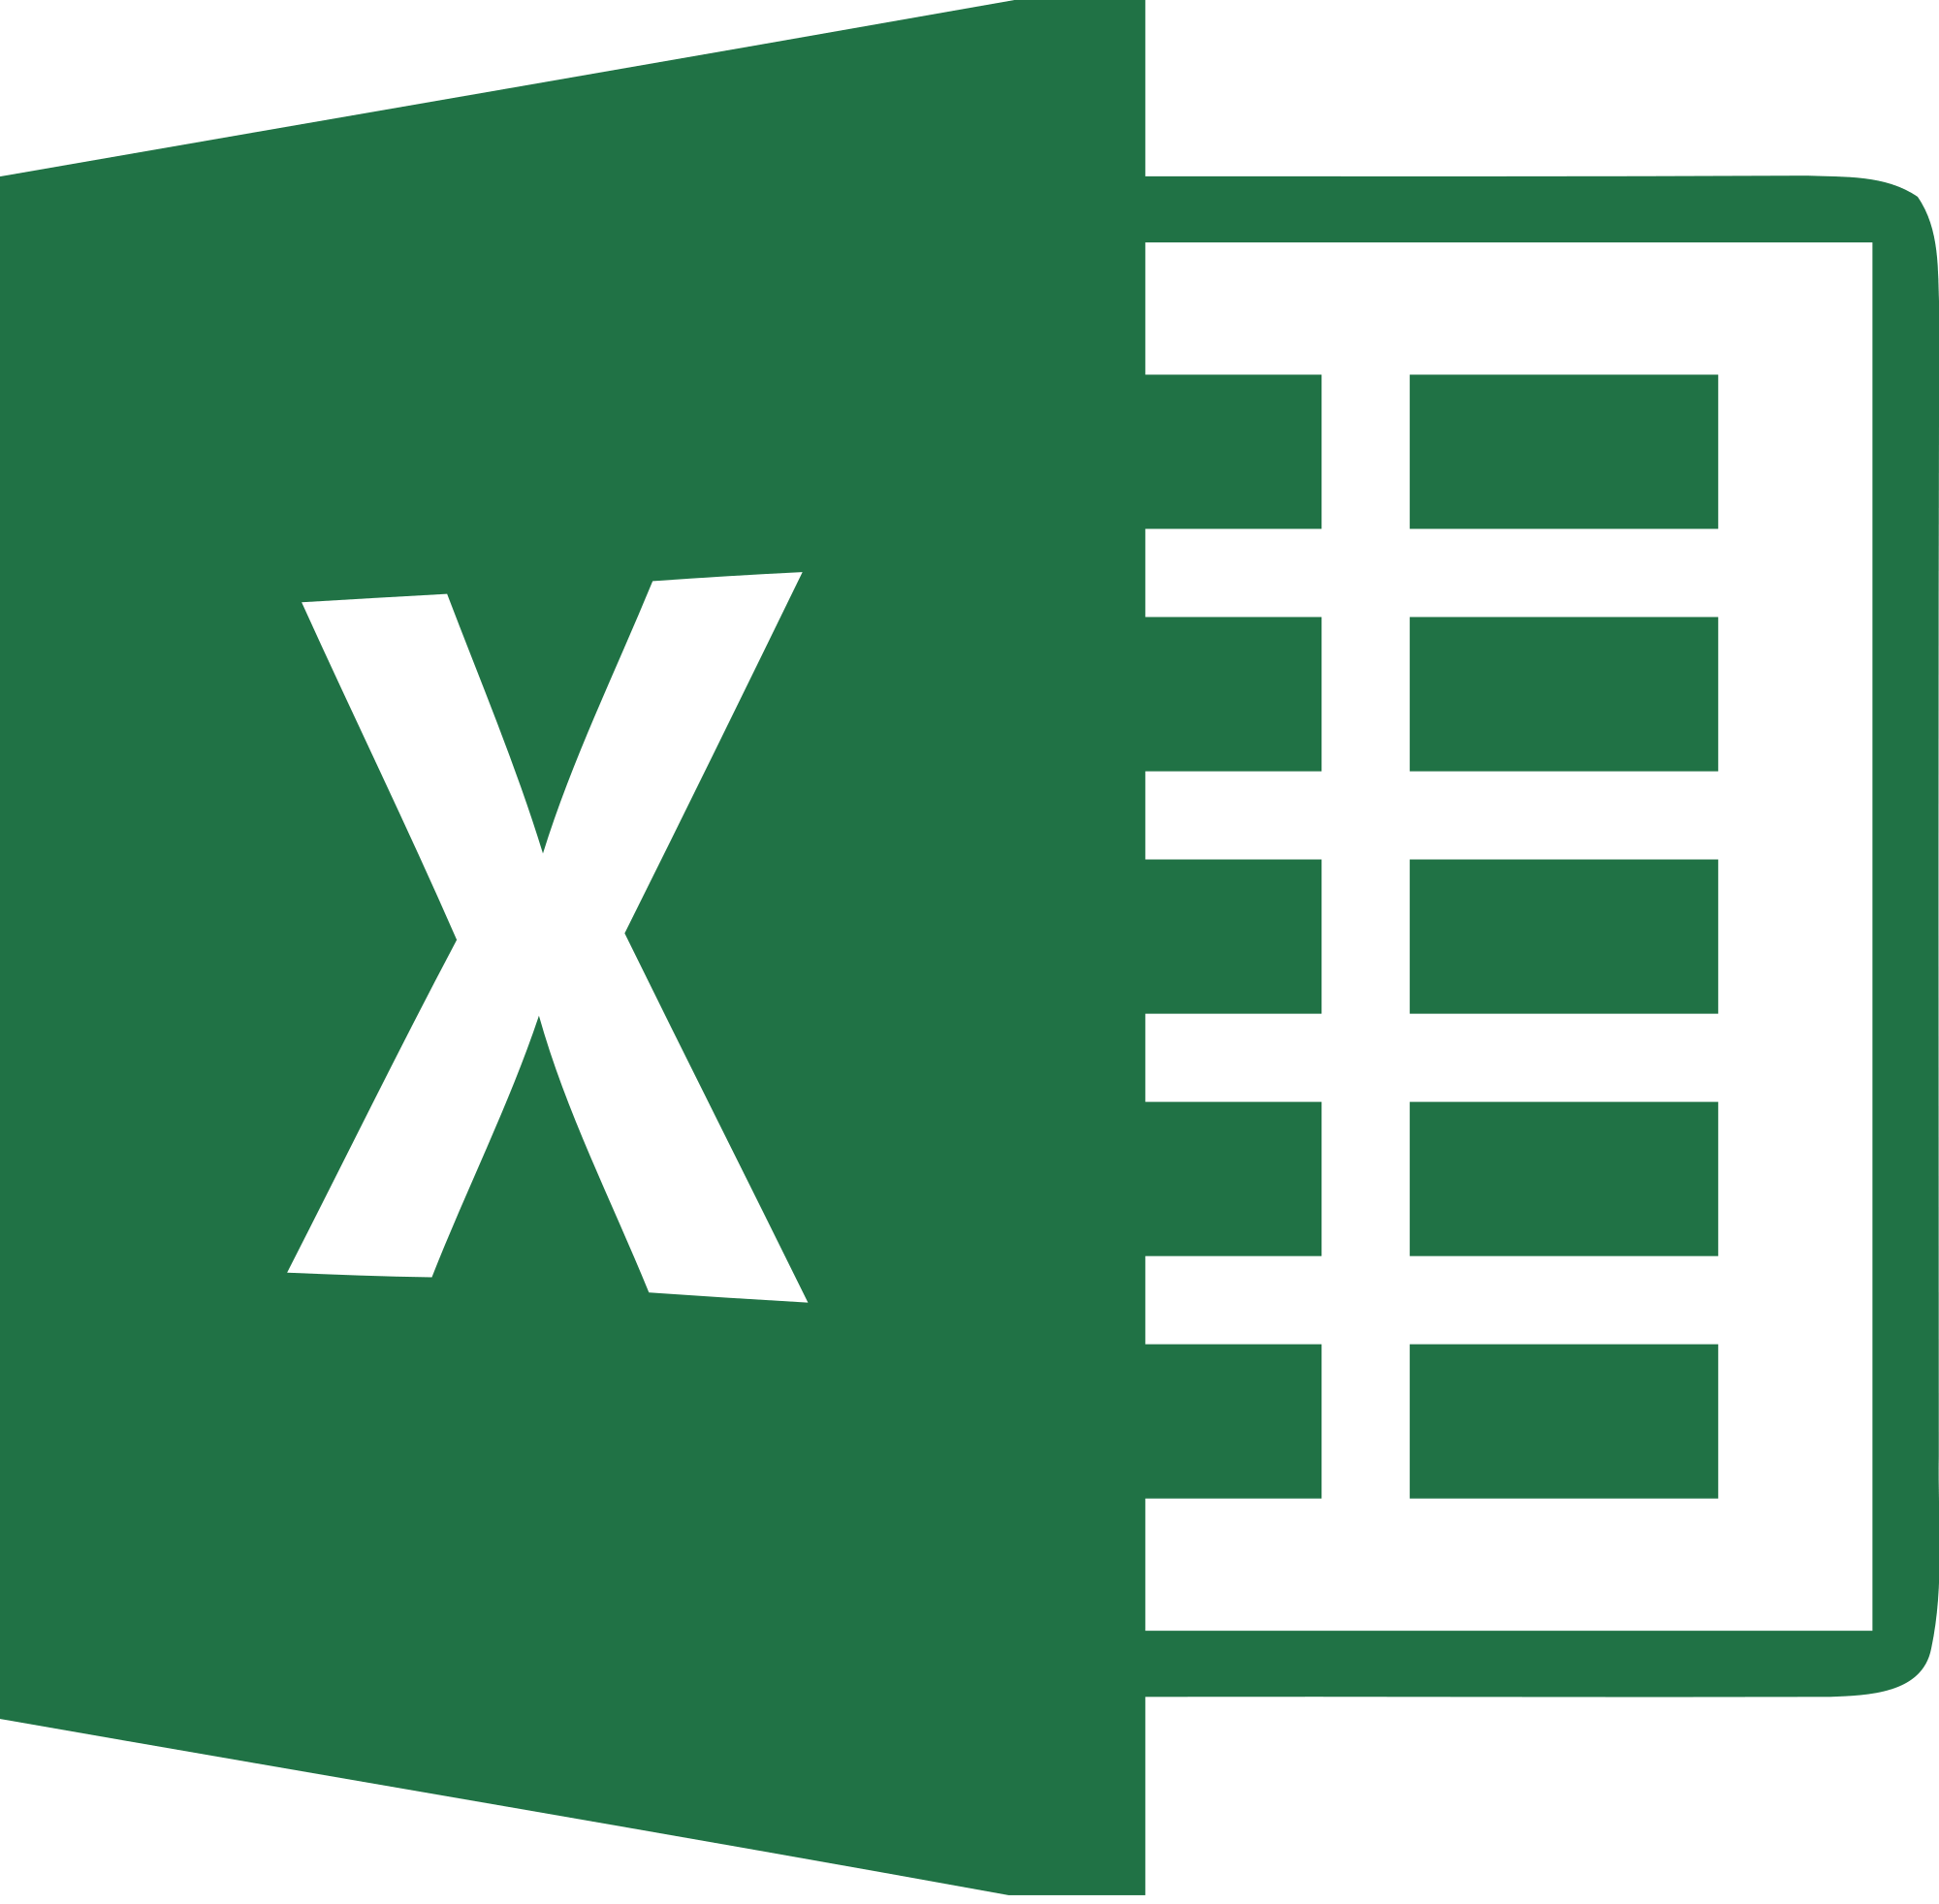 Microsoft Excel Logo - File:Microsoft Excel 2013 logo.svg - Wikimedia Commons